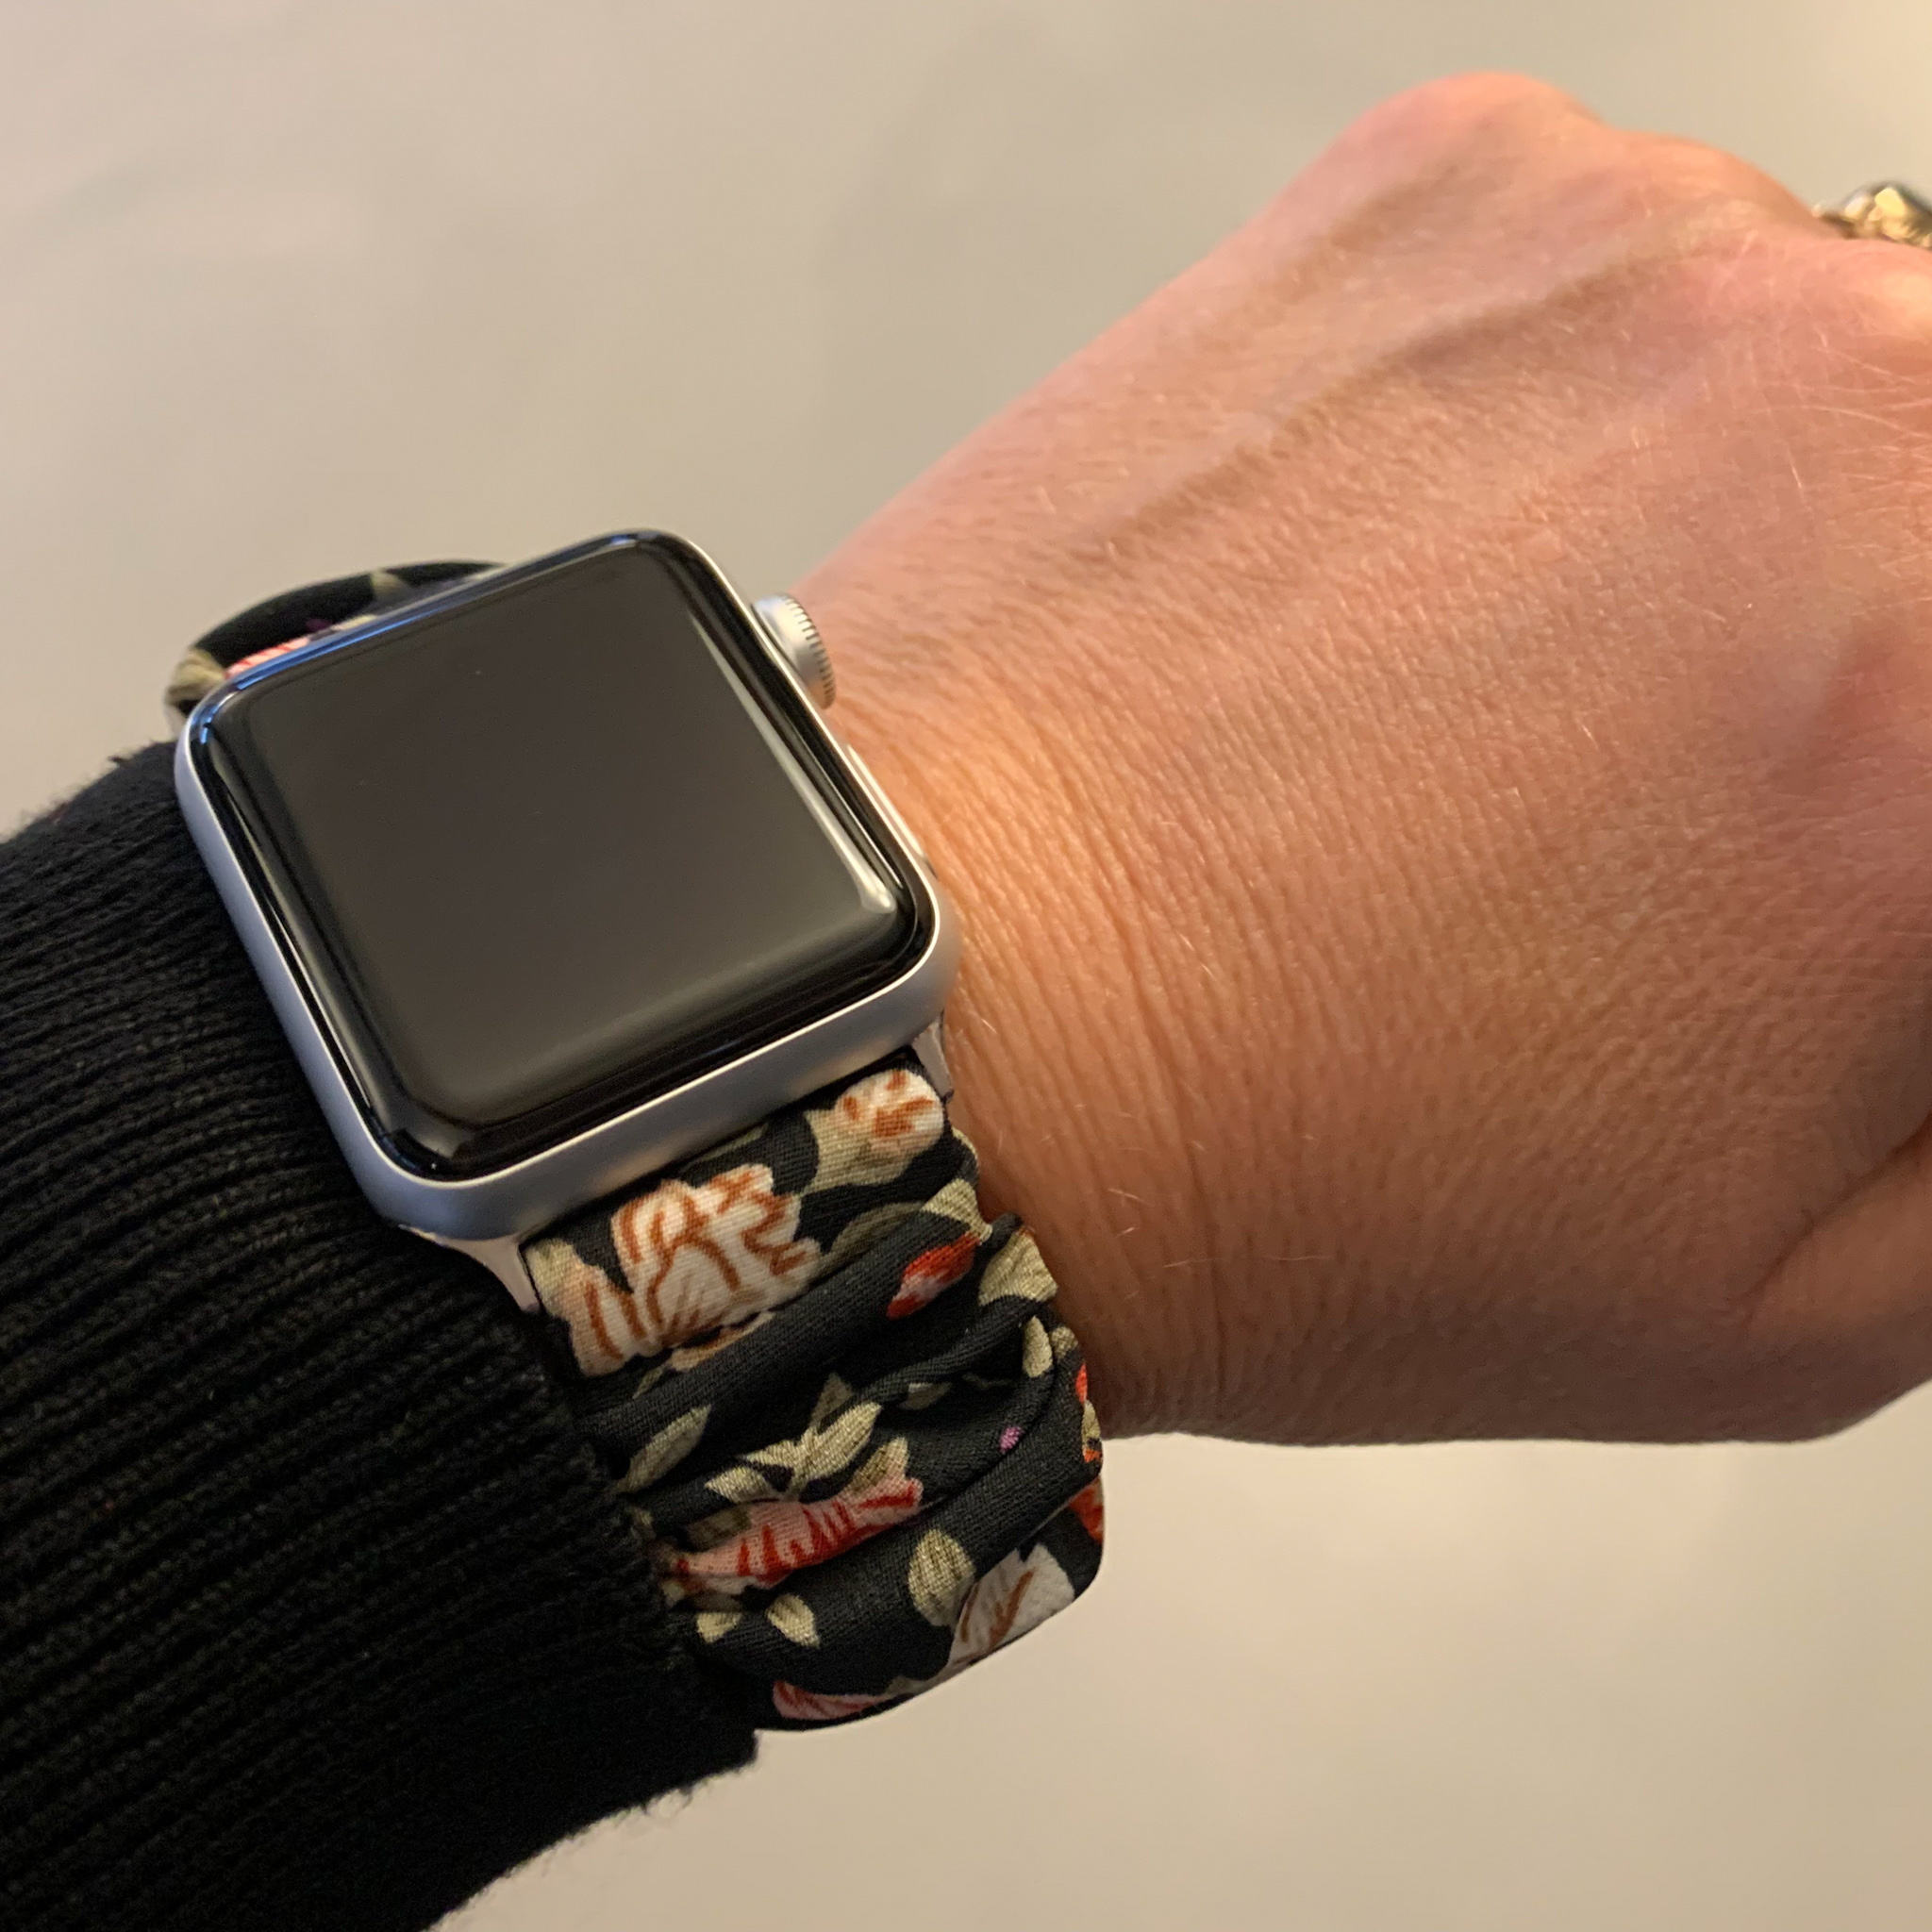 Cinturino elastico in nylon per Apple Watch - nero floreale